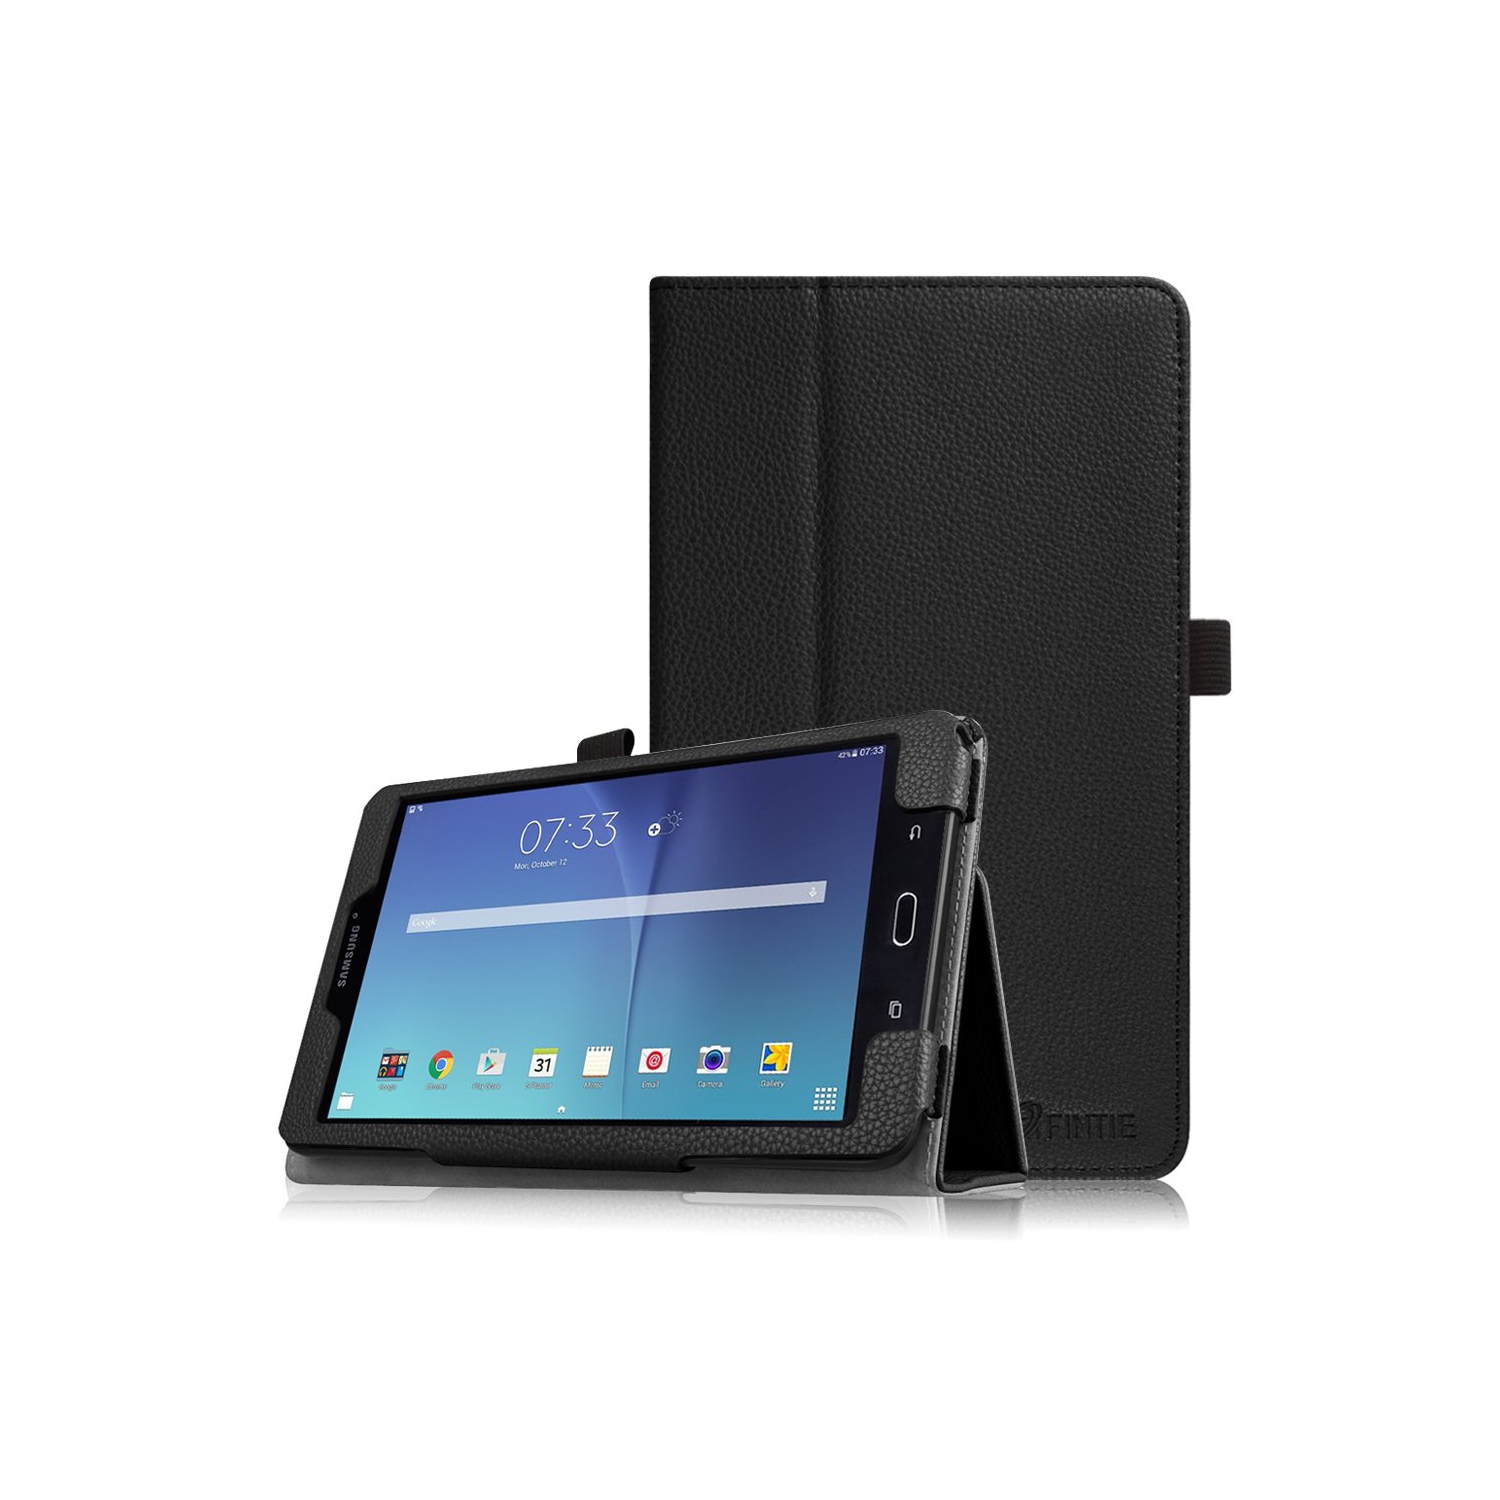 Fintie Folio Case for Samsung Galaxy Tab E 8.0 - Premium PU Leather Slim Fit Smart Stand Cover for Galaxy Tab E 32GB SM-T378